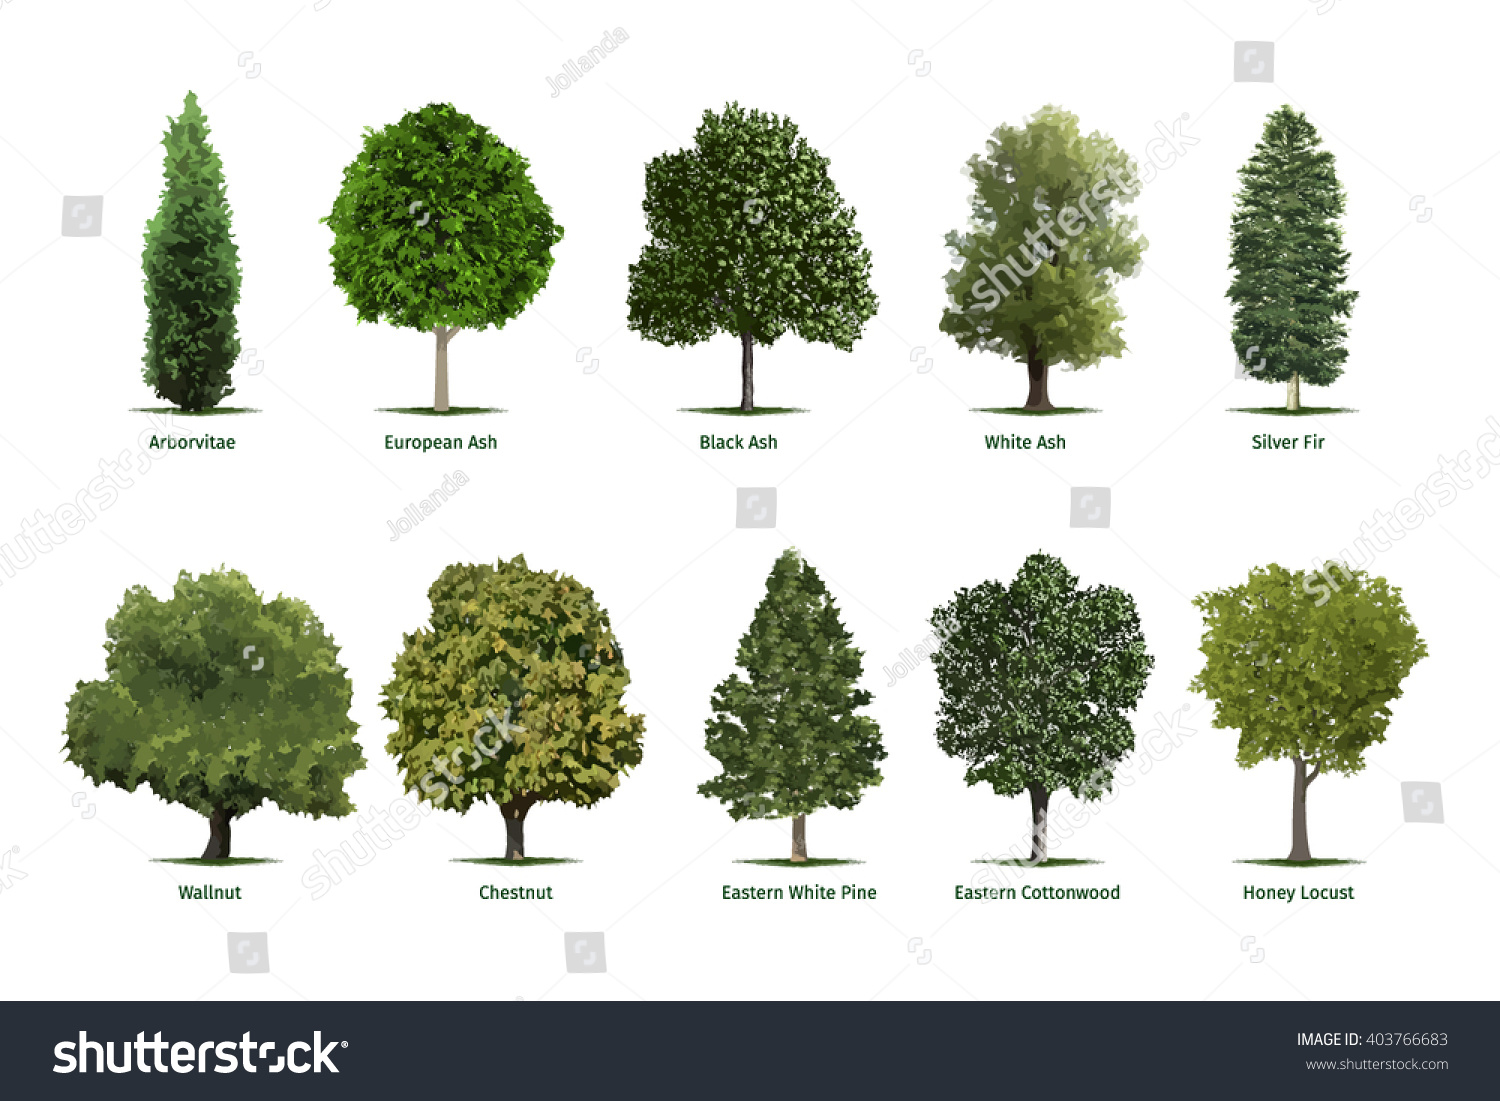 SVG of Tree types, sorts/specimens.Vector tree illustrations of Arborvitae, European Ash, Black Ash, White Ash, Silver Fir, Chestnut, Eastern White Pine, Cottonwood and Honey Locust trees.  svg